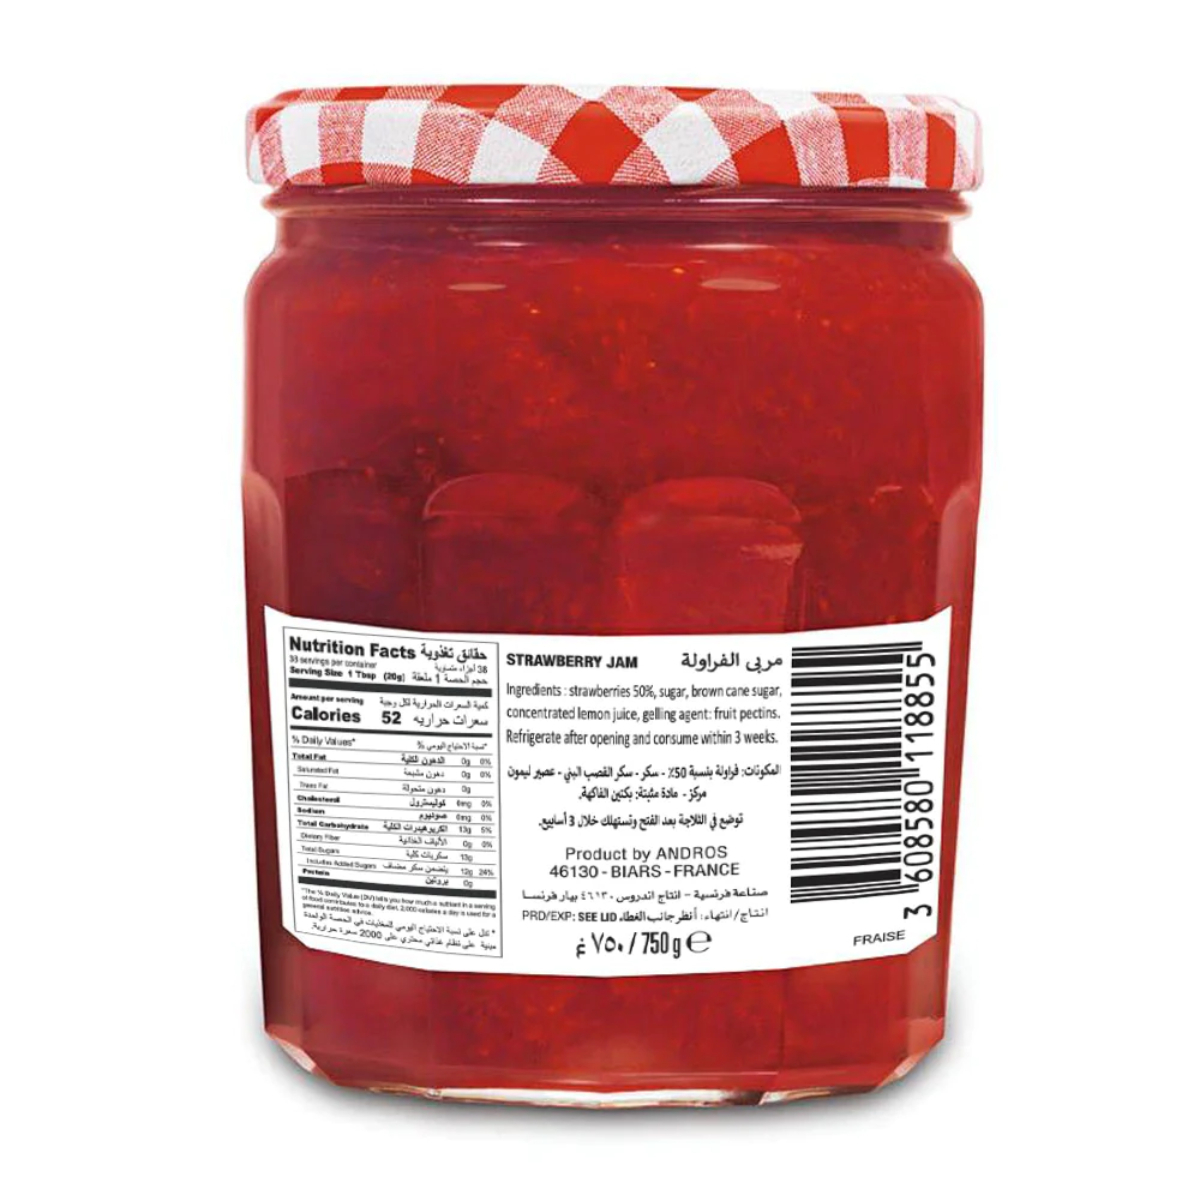 Bonne Maman Strawberry Preserve Jam 750 g